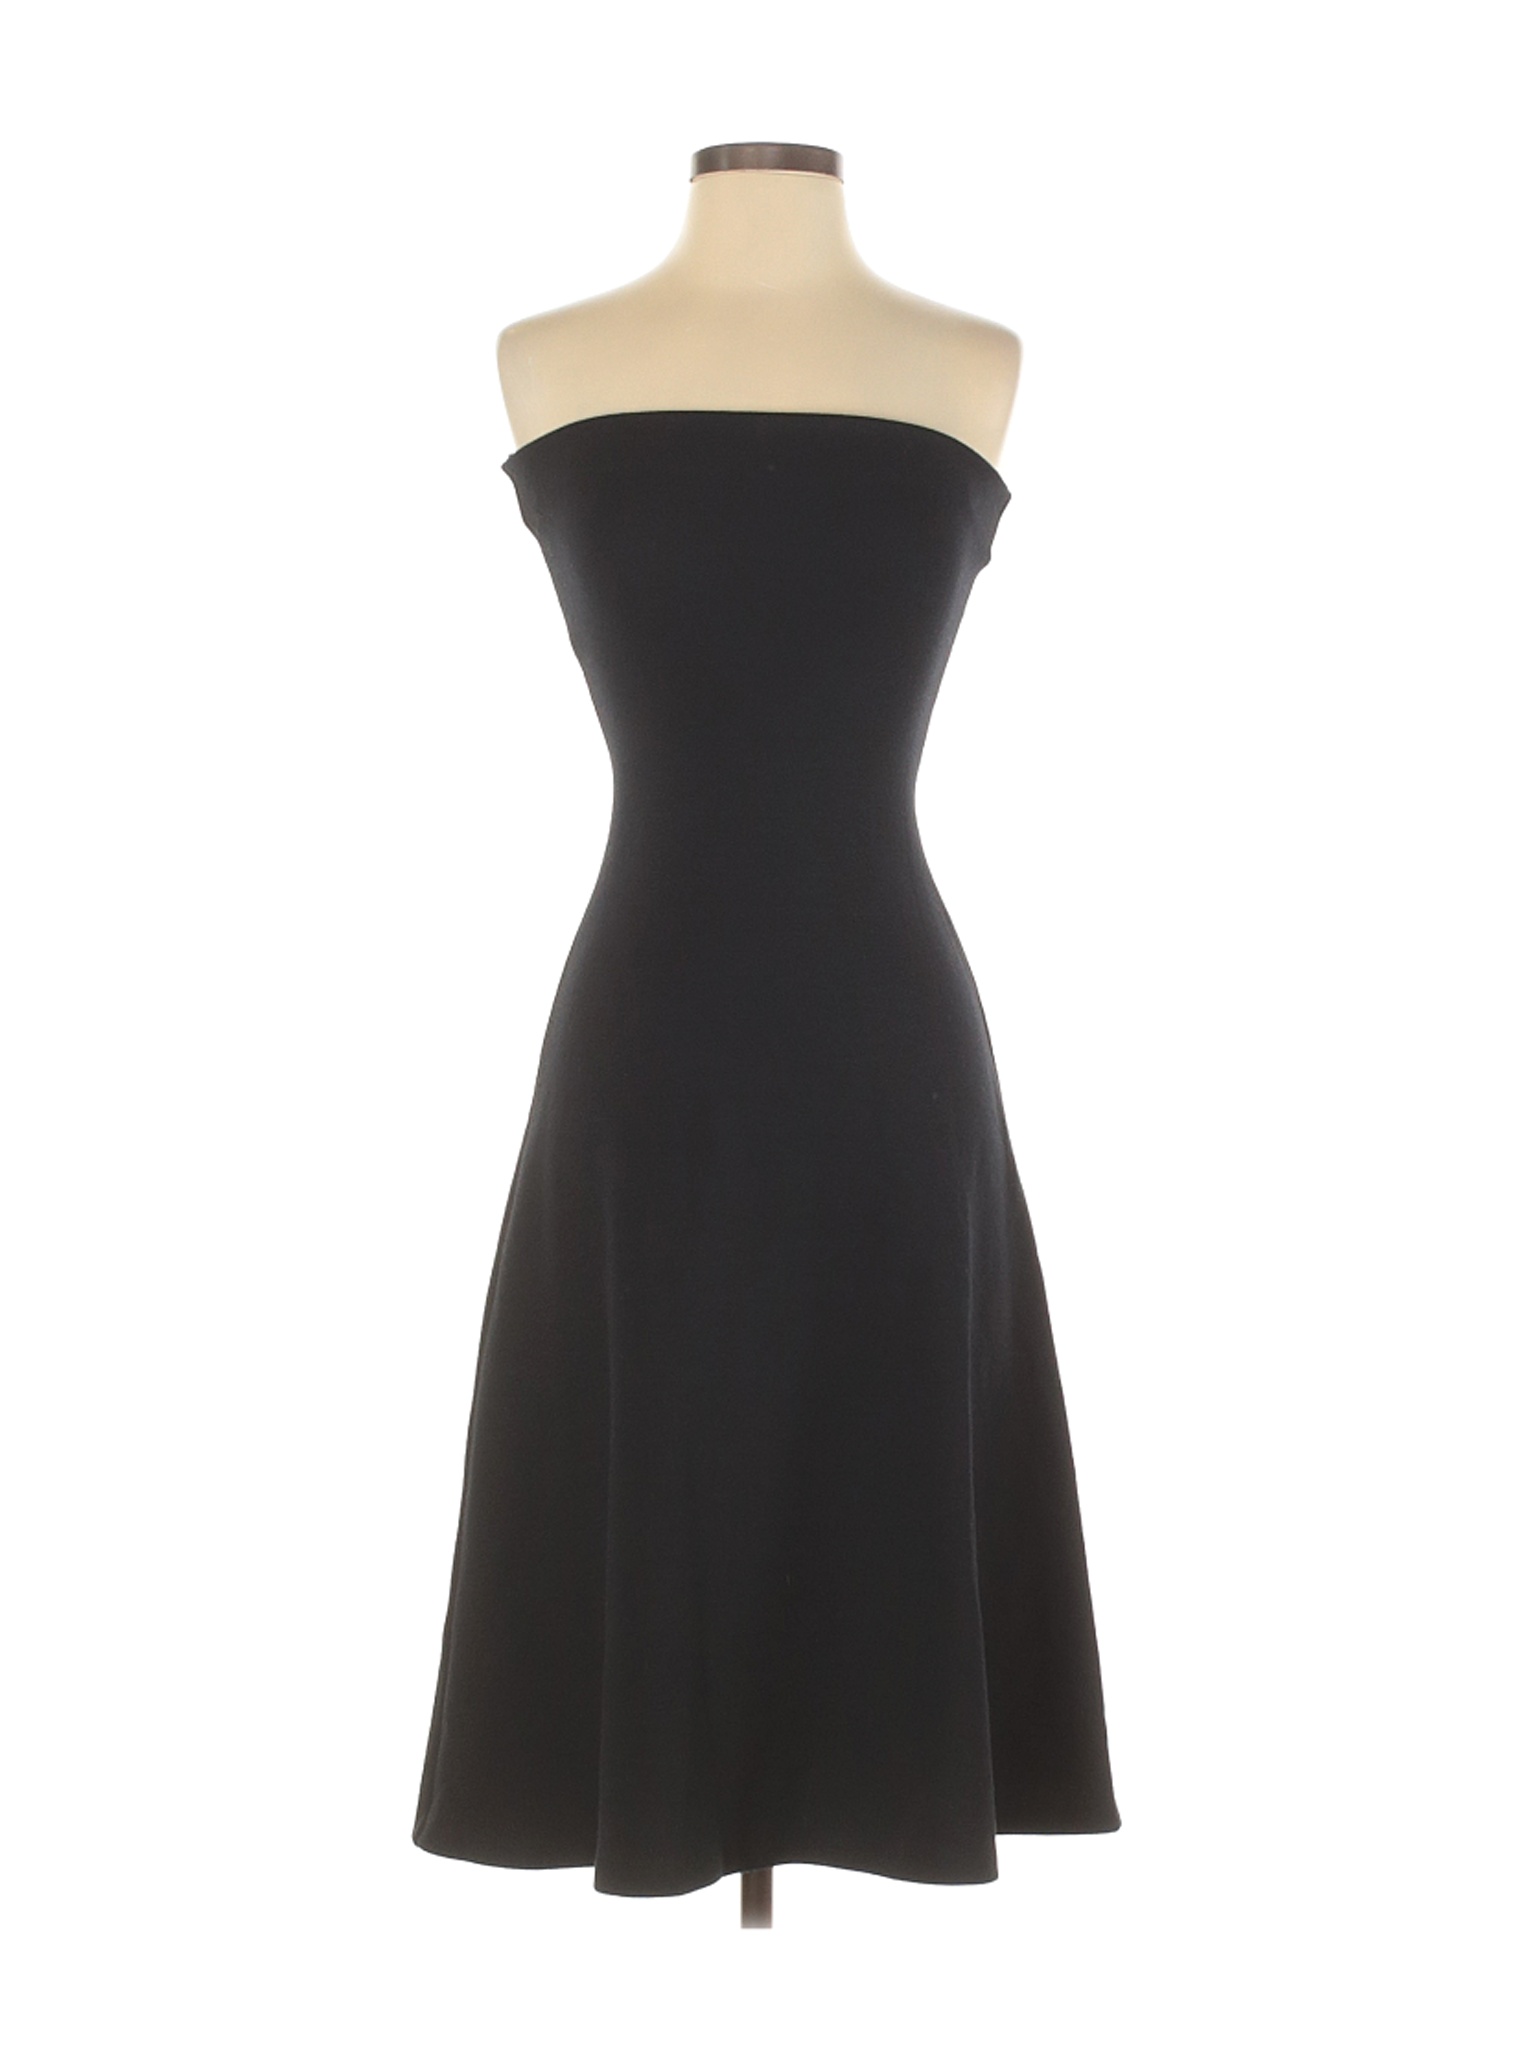 Jil Sander Women Black Casual Dress 34 eur | eBay